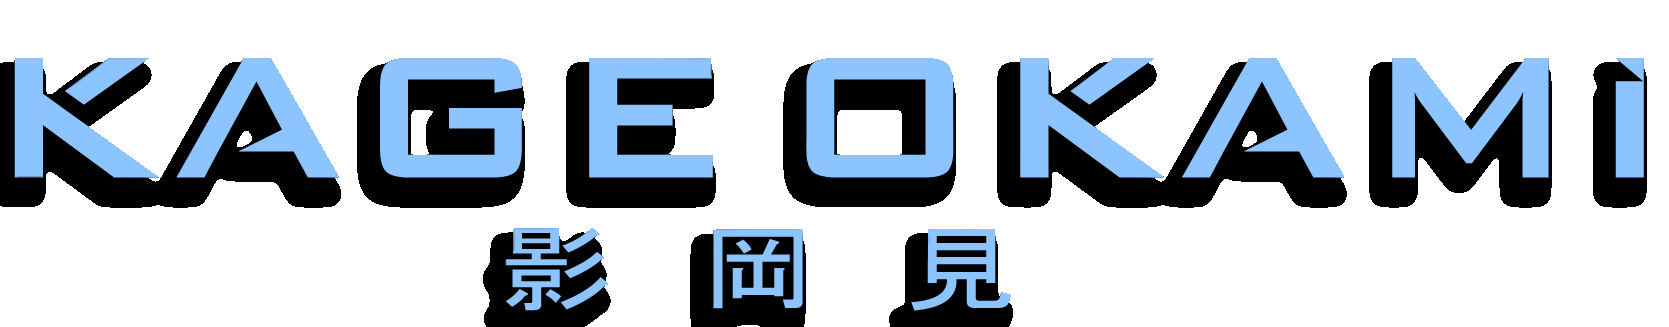 Kage Okami Logo2